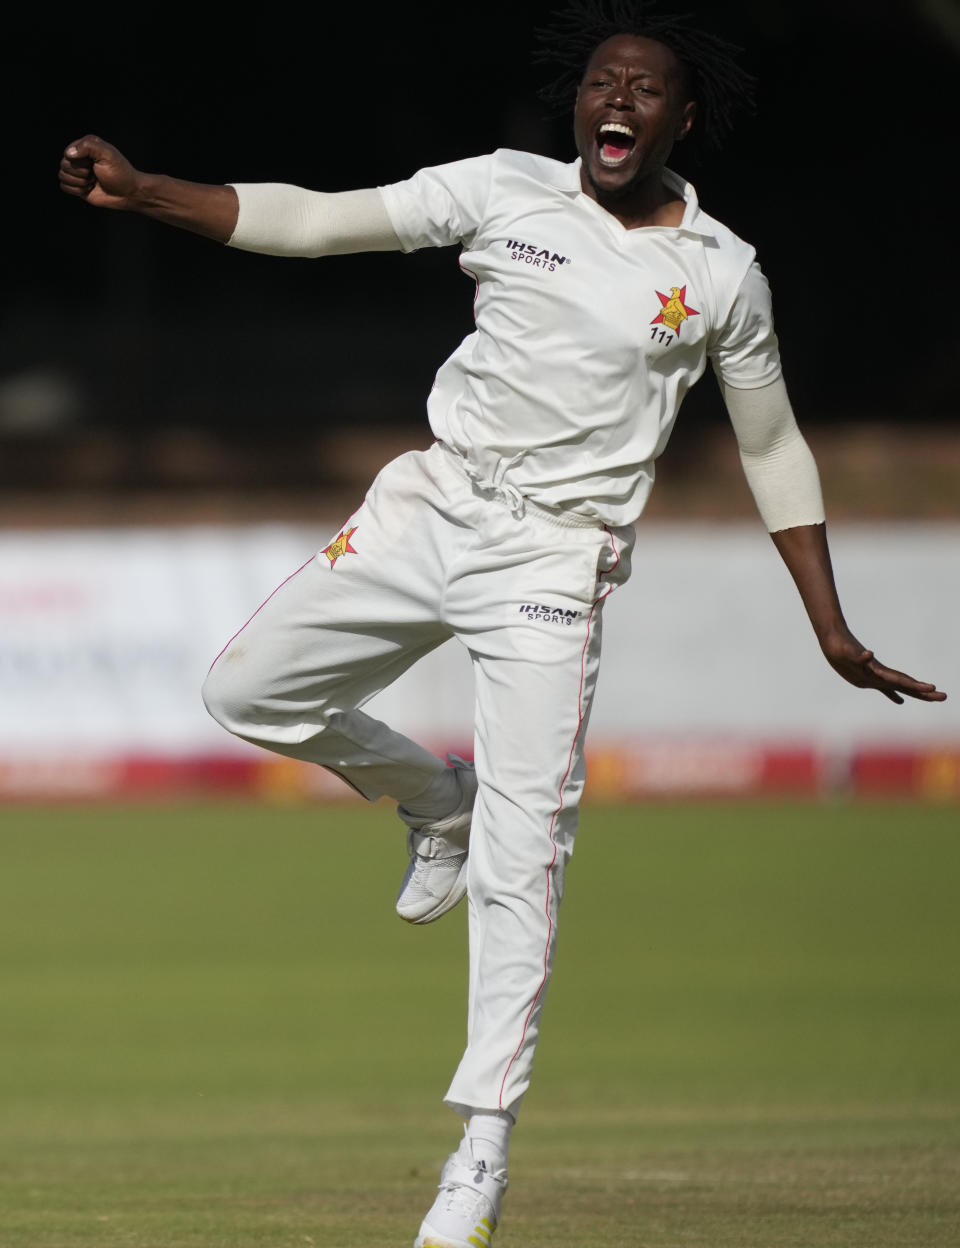 Zimbabwean bowler Victor Nyauchi celebrates a wicket on the second day of the second Test cricket match between Zimbabwe and West Indies at Queens Sports Club in Bulawayo, Zimbabwe, Monday, Feb. 13, 2023. (AP Photo/Tsvangirayi Mukwazhi)